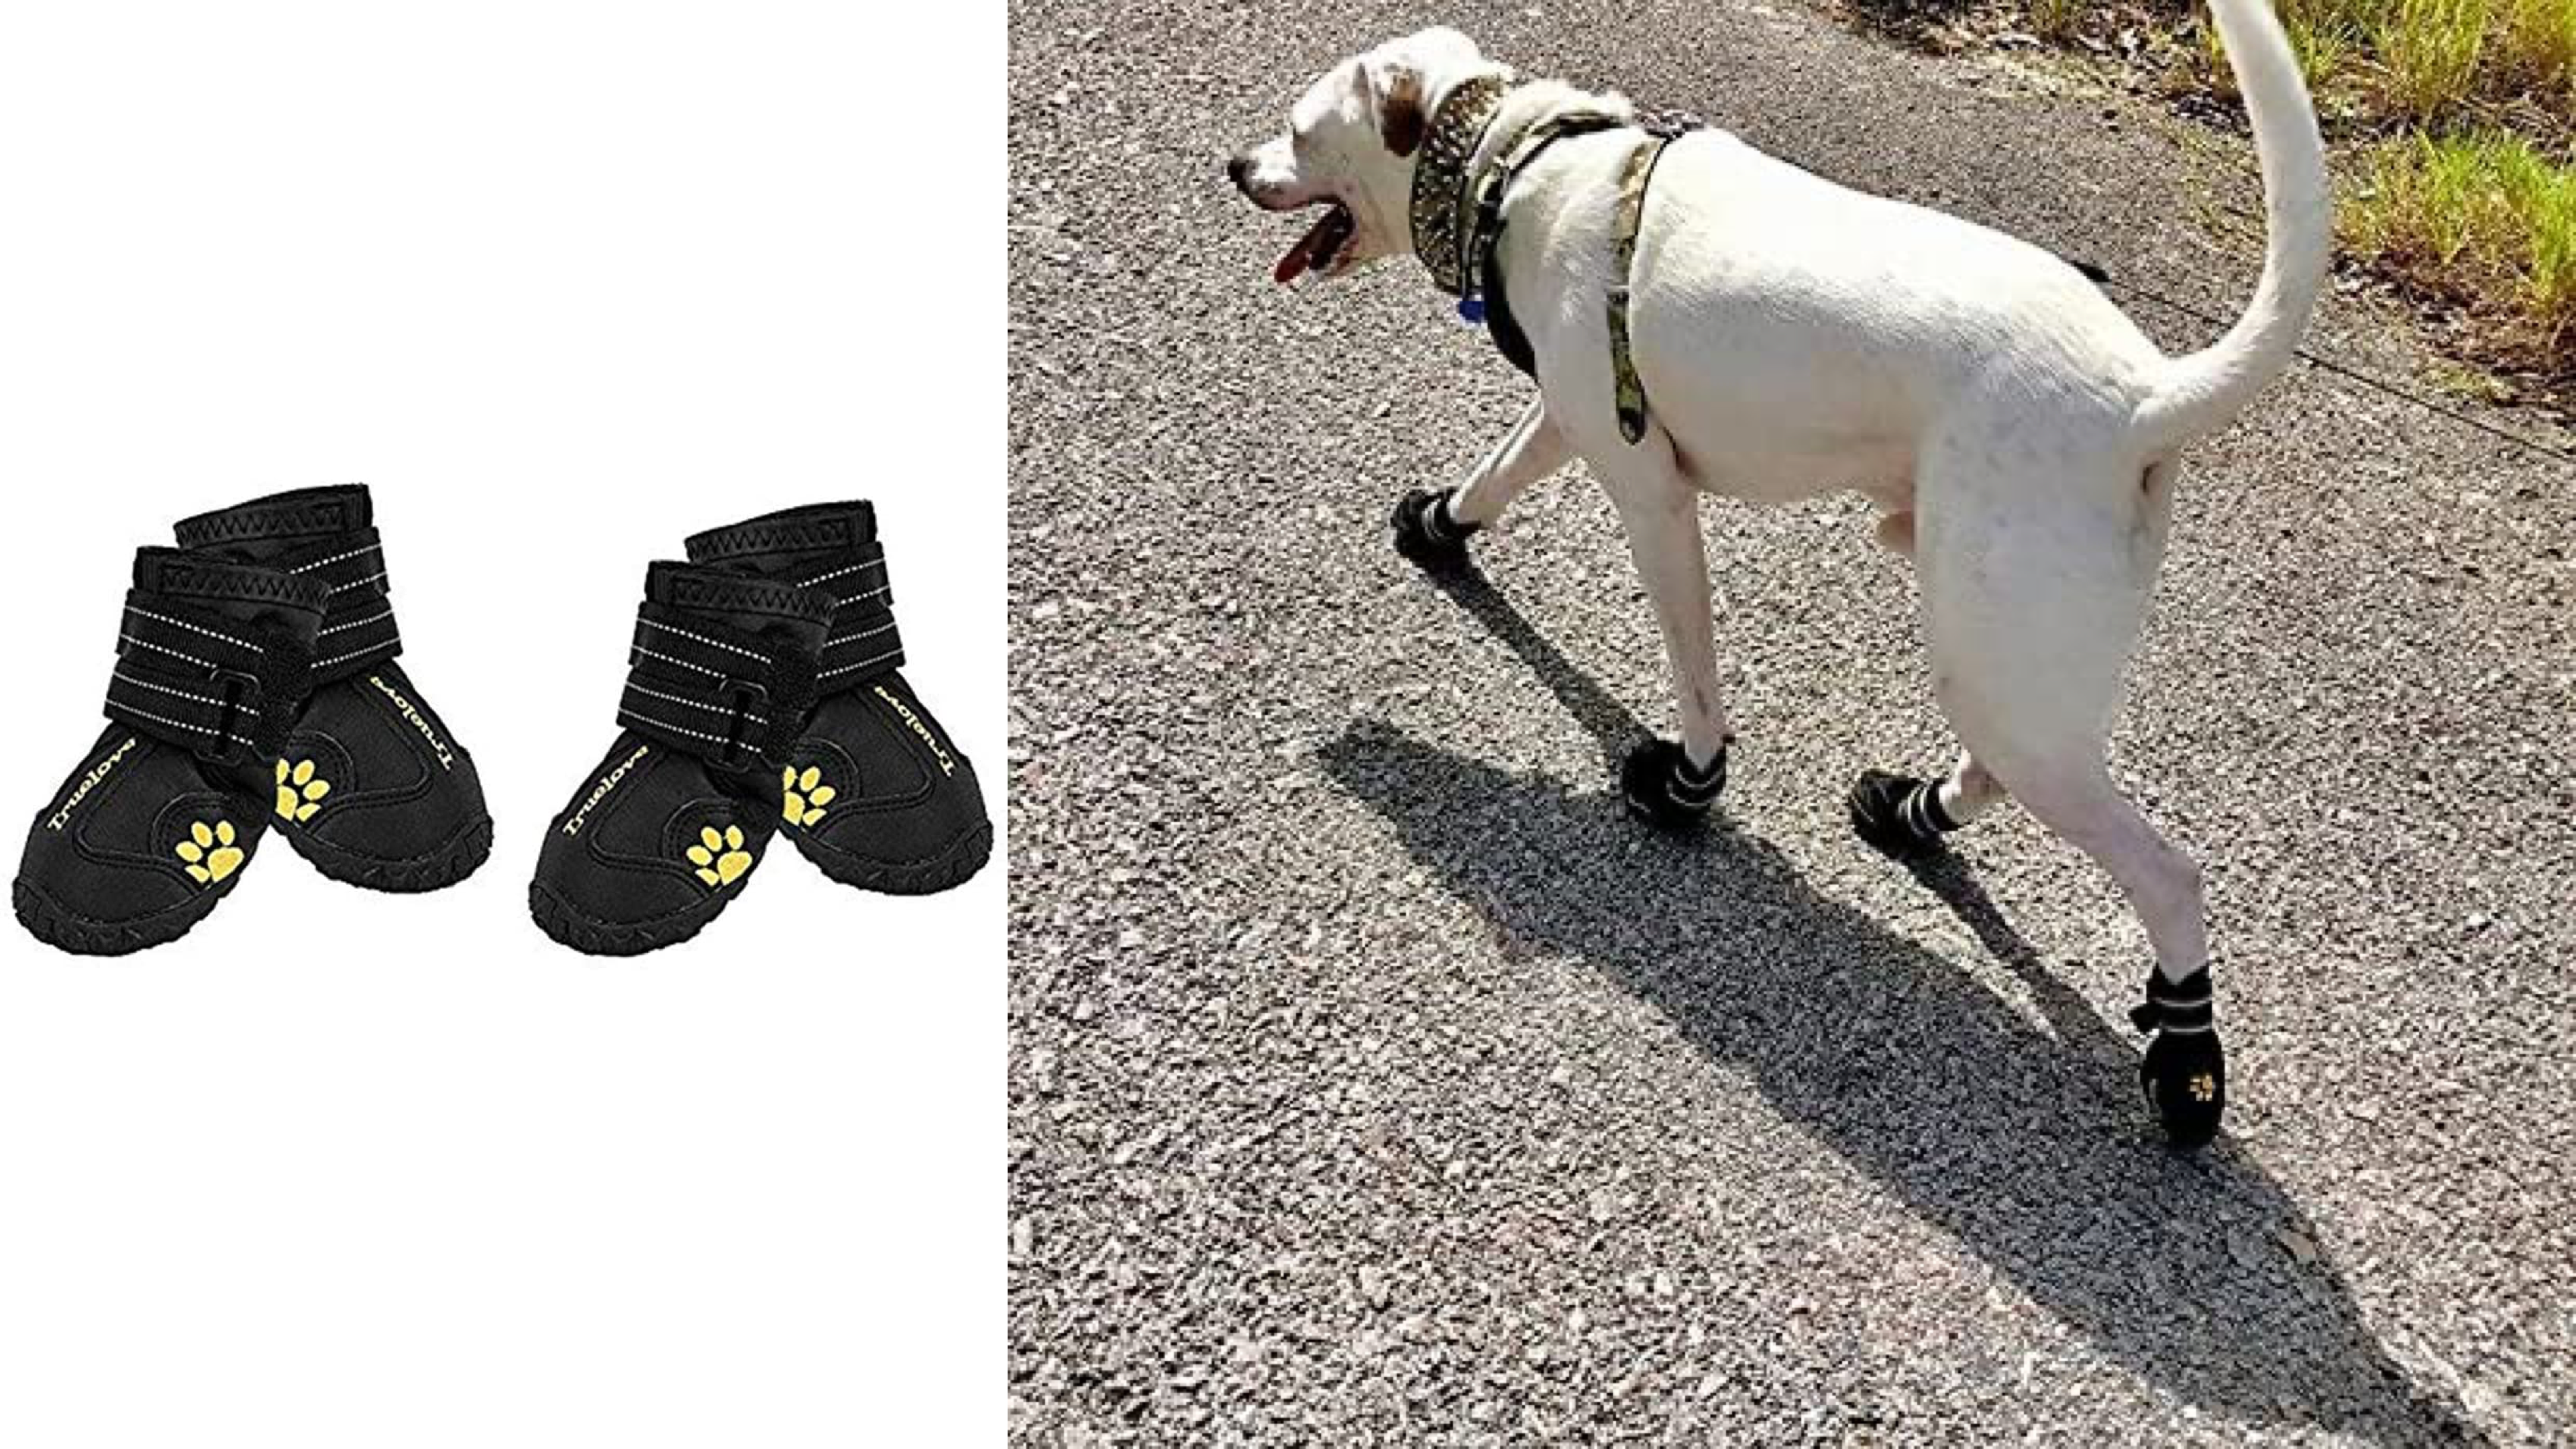 waterproof dog booties for snow, mud, and salt